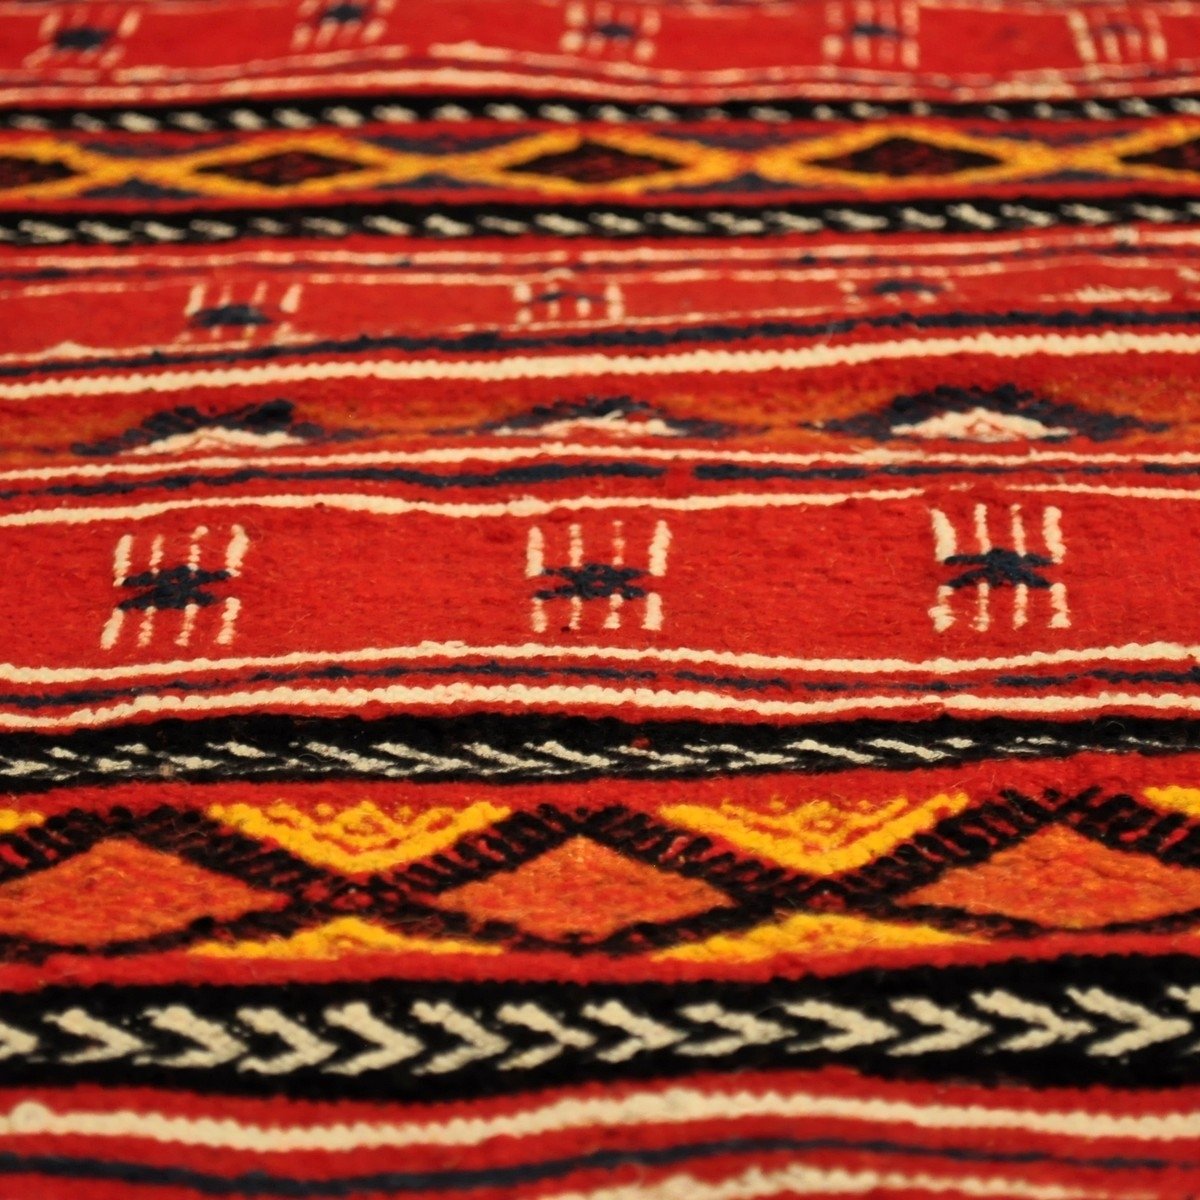 Berber tapijt Tapijt Kilim lang Babmnara 60x200 Rood (Handgeweven, Wol, Tunesië) Tunesisch kilimdeken, Marokkaanse stijl. Rechth